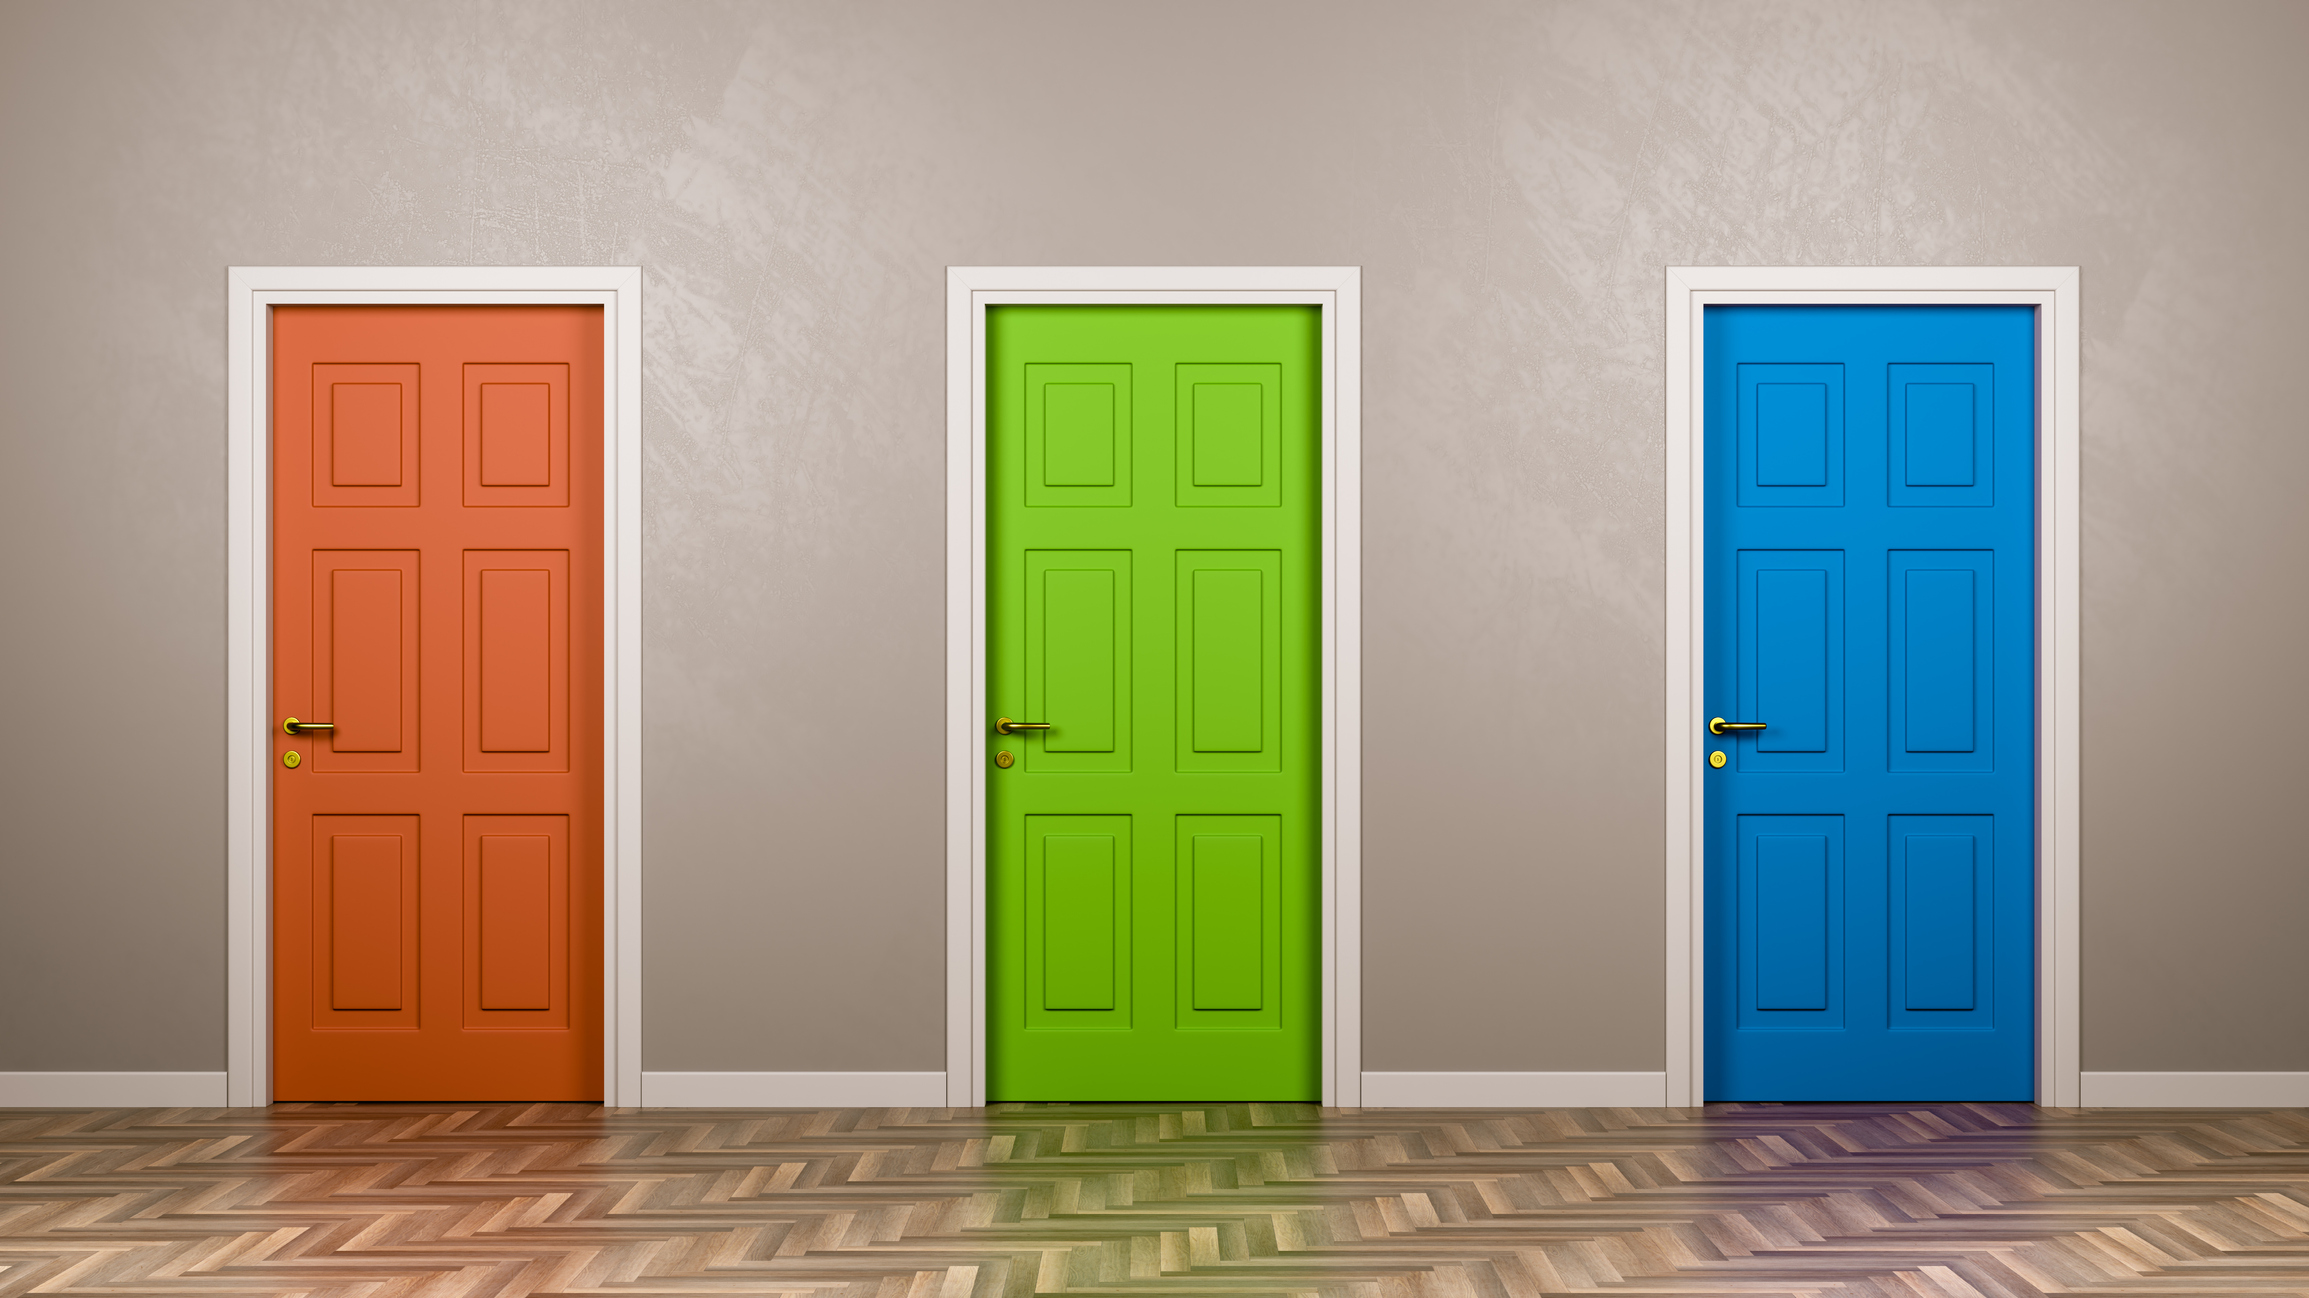 blog header image of doors representing developer choices